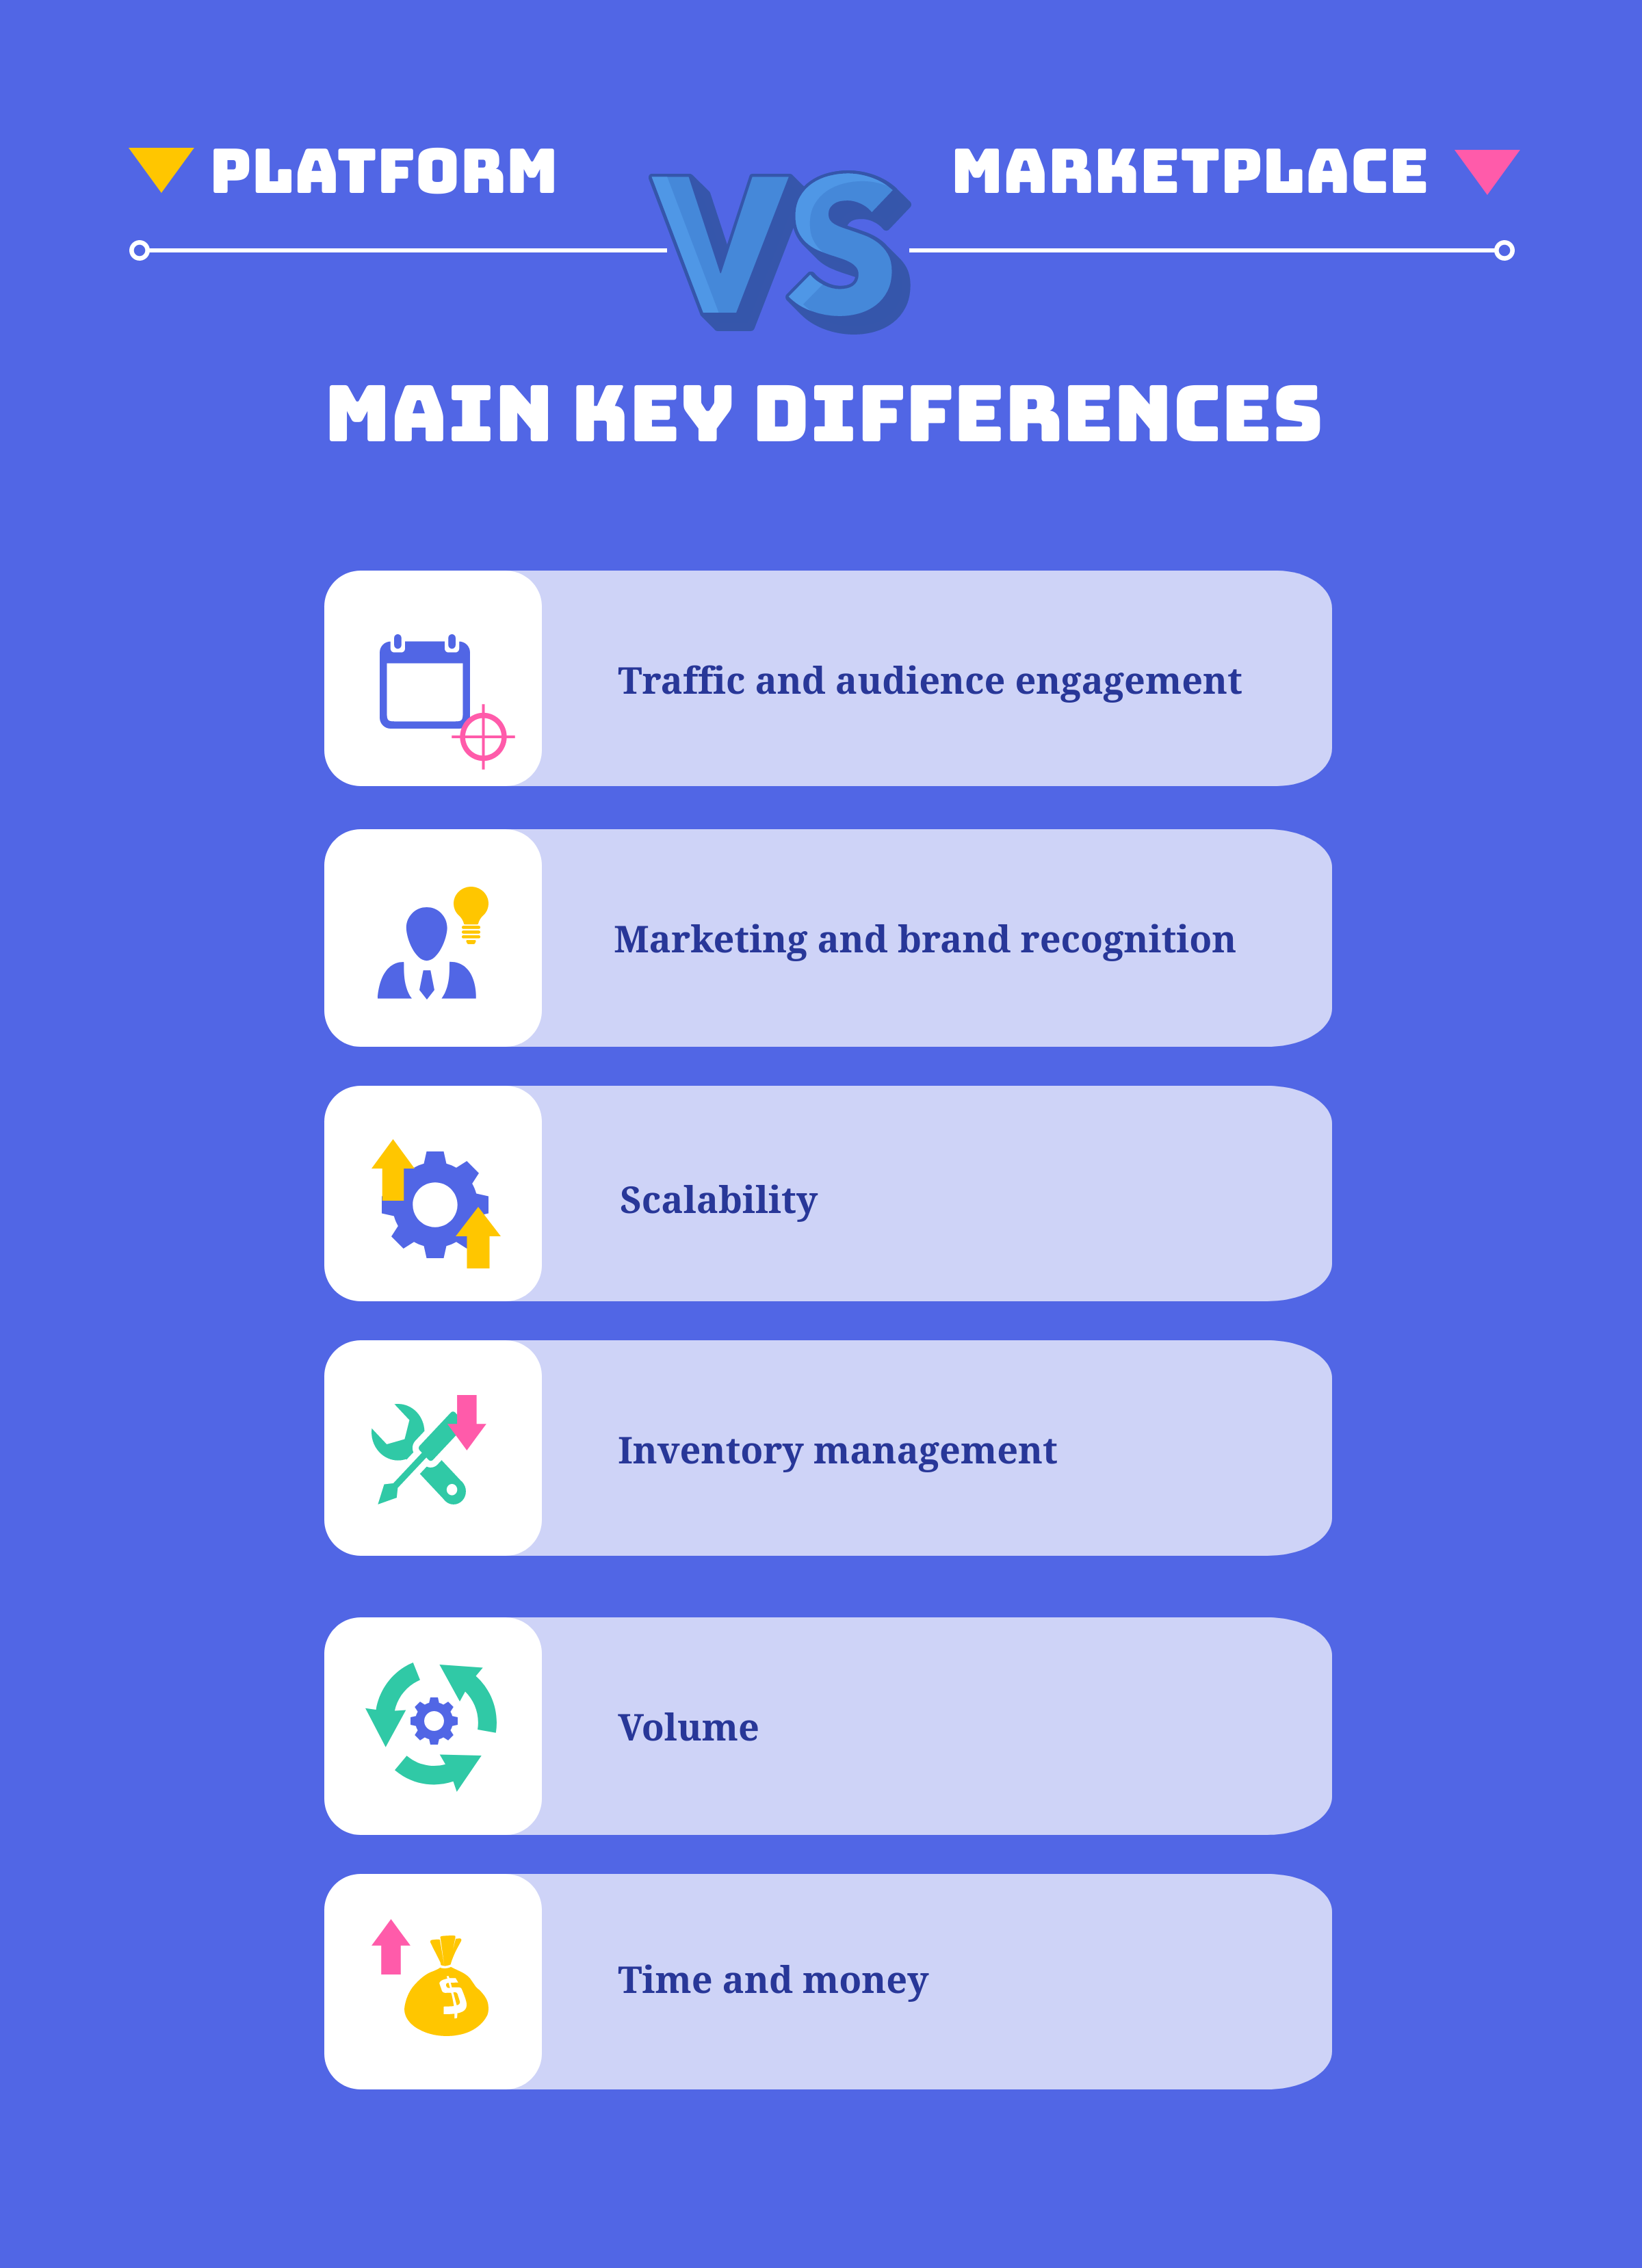 platform vs marketplace - main key differences